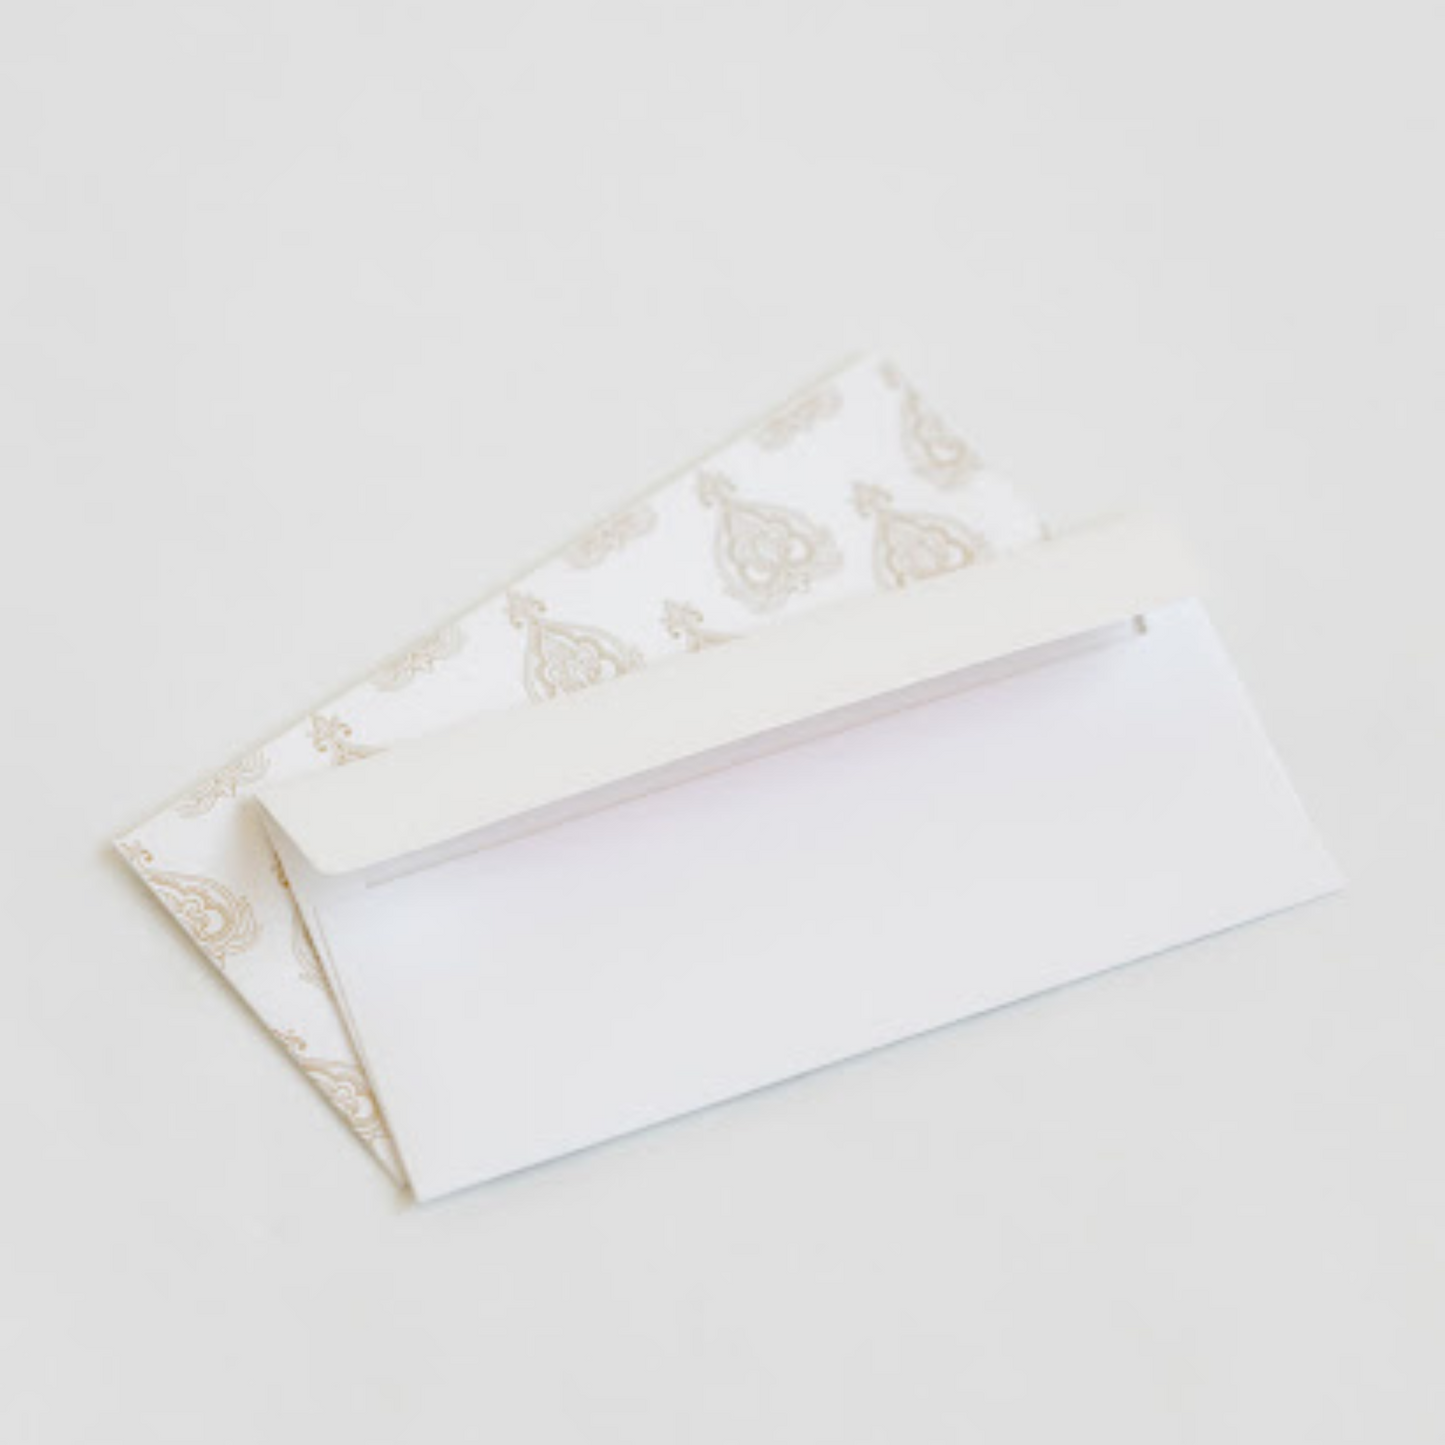 5 Mulghal Leaf Shugun Money Gift Envelopes 7 Colours Available